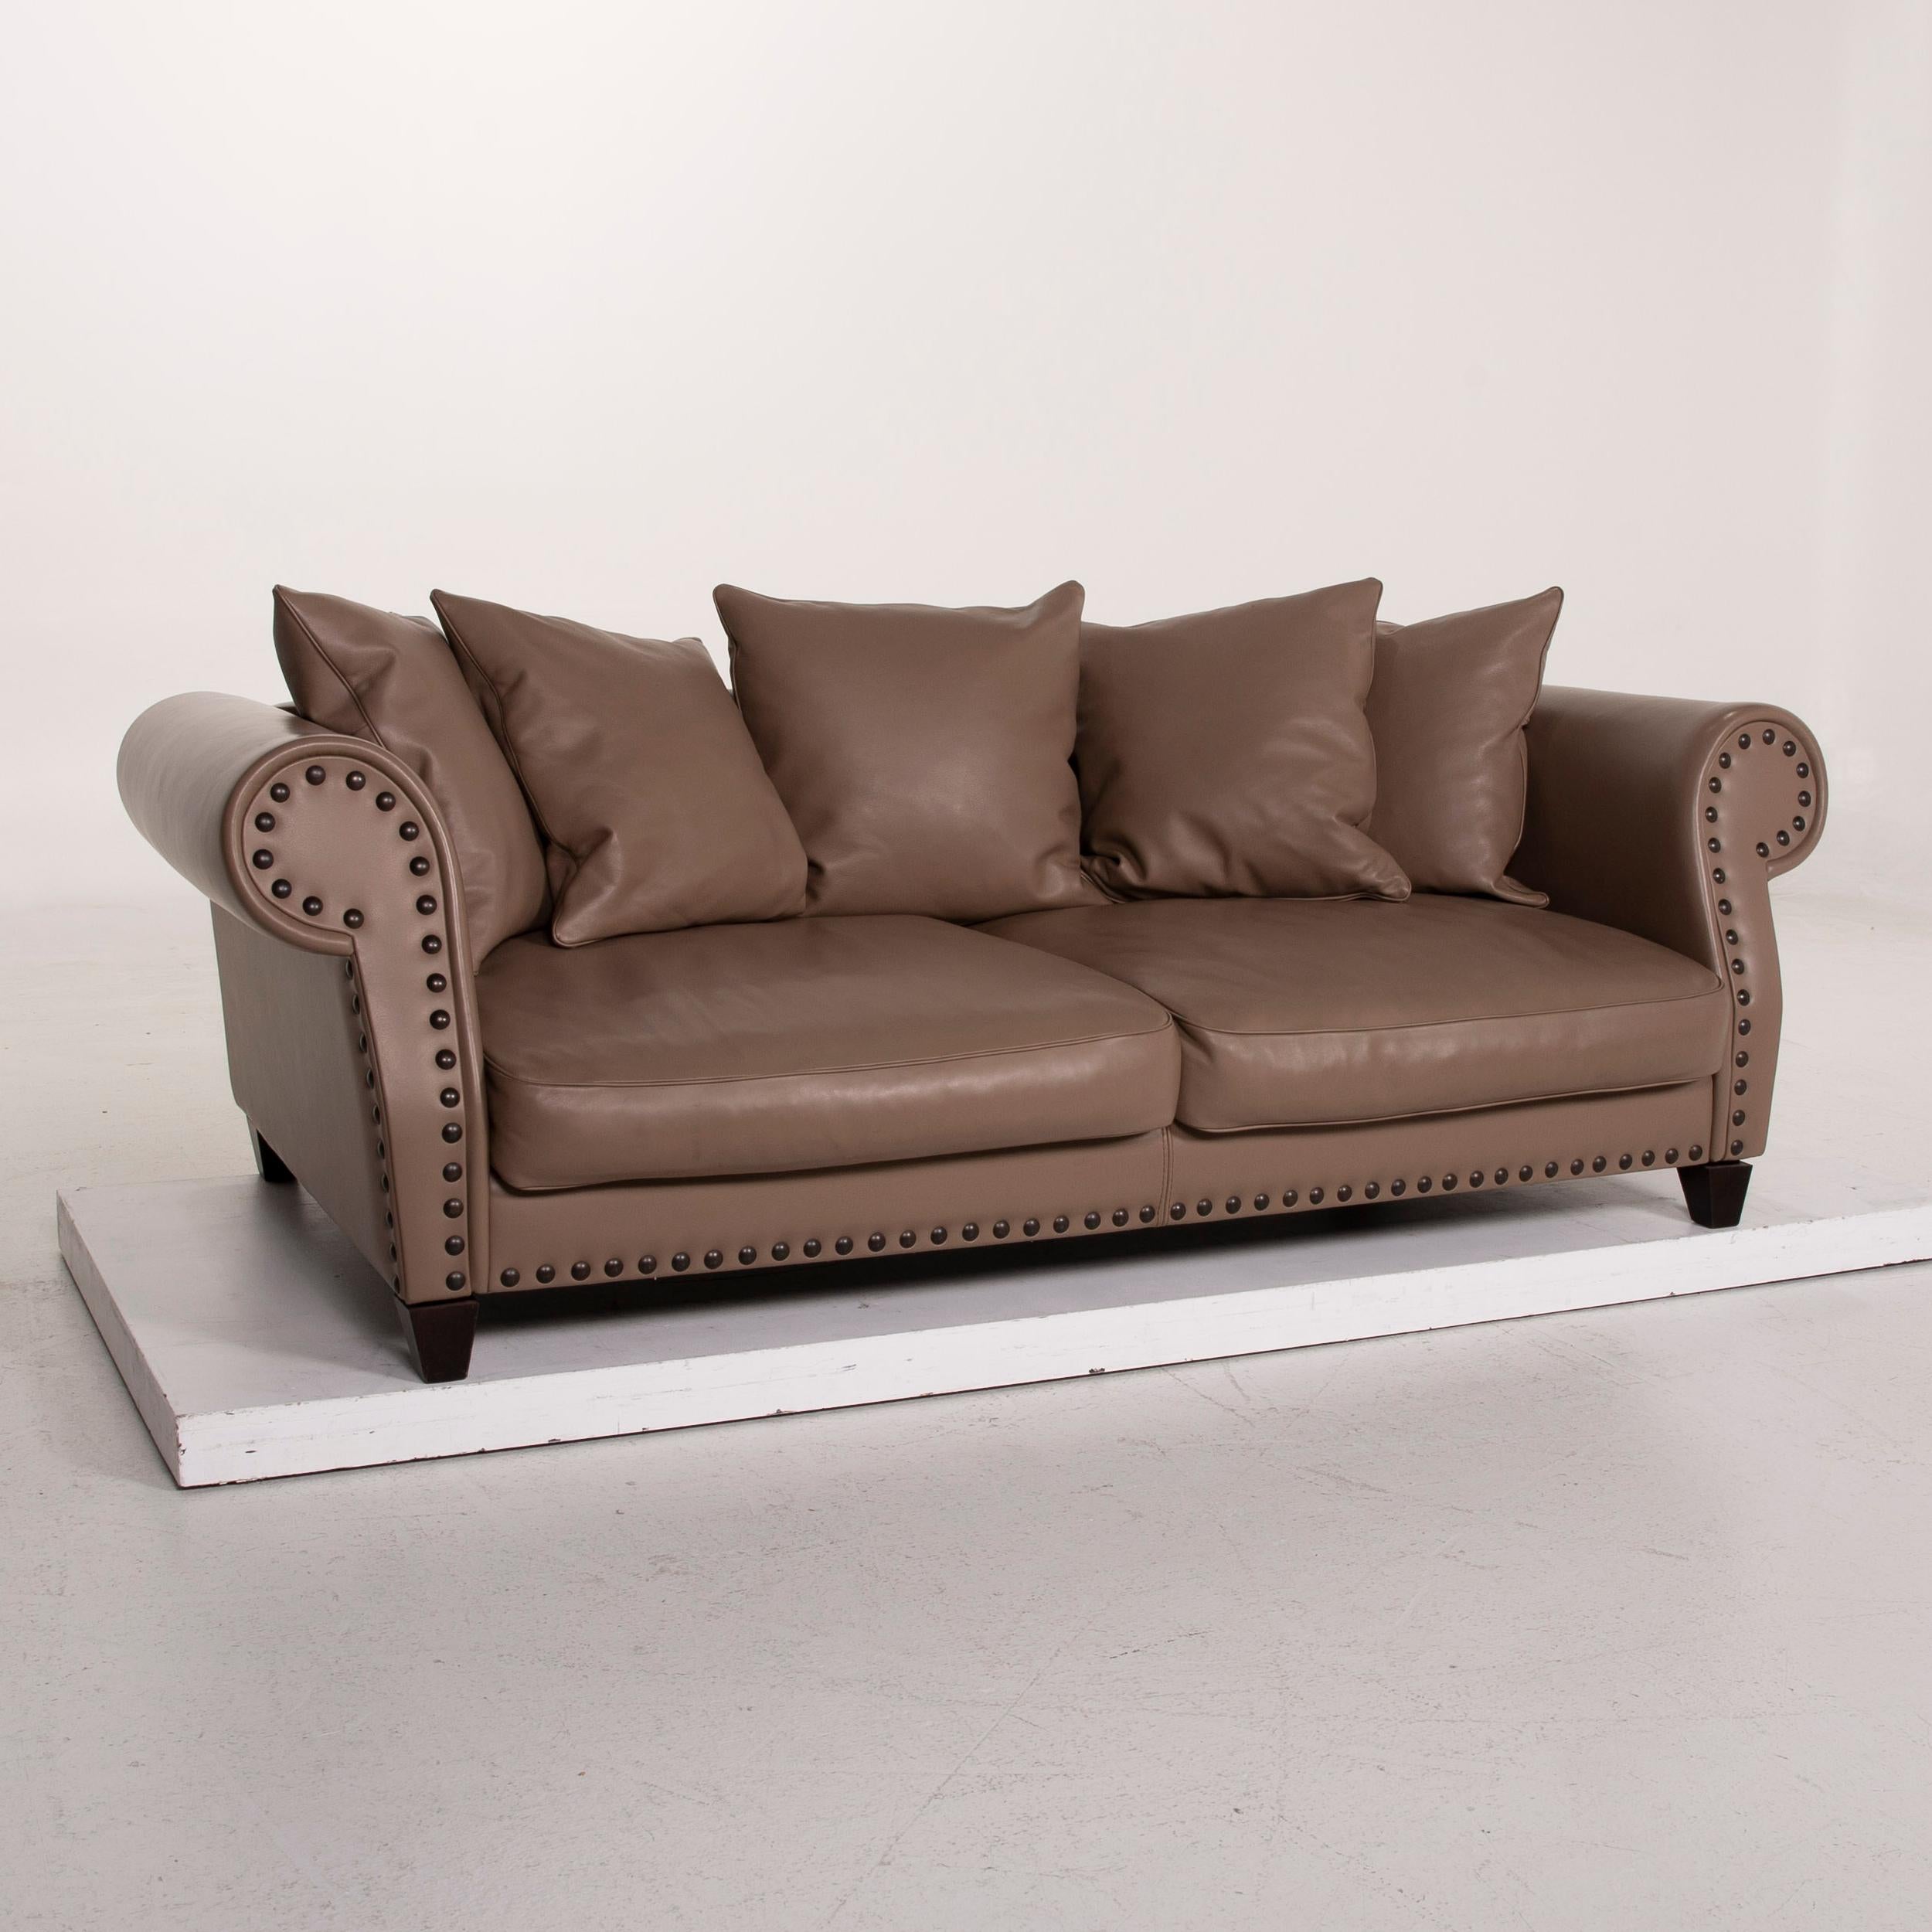 Roche Bobois Chester Chic Leather Sofa Brown Three-Seat In Good Condition For Sale In Cologne, DE